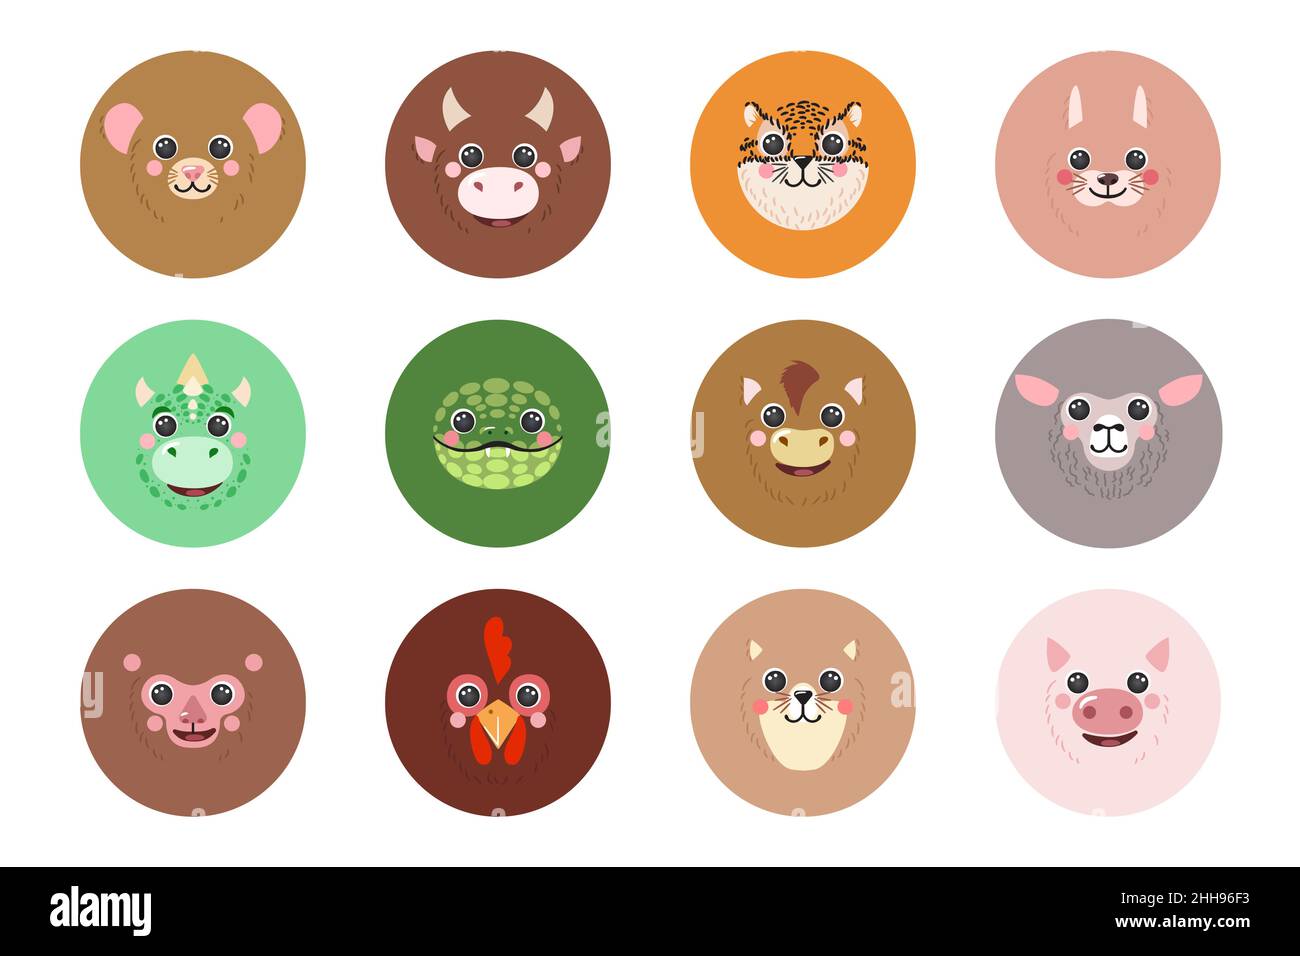 Round Animals Set Chinese Zodiac Twelve Signs portraits Icons Cute cartoon  illustration flat vector avatars rat,